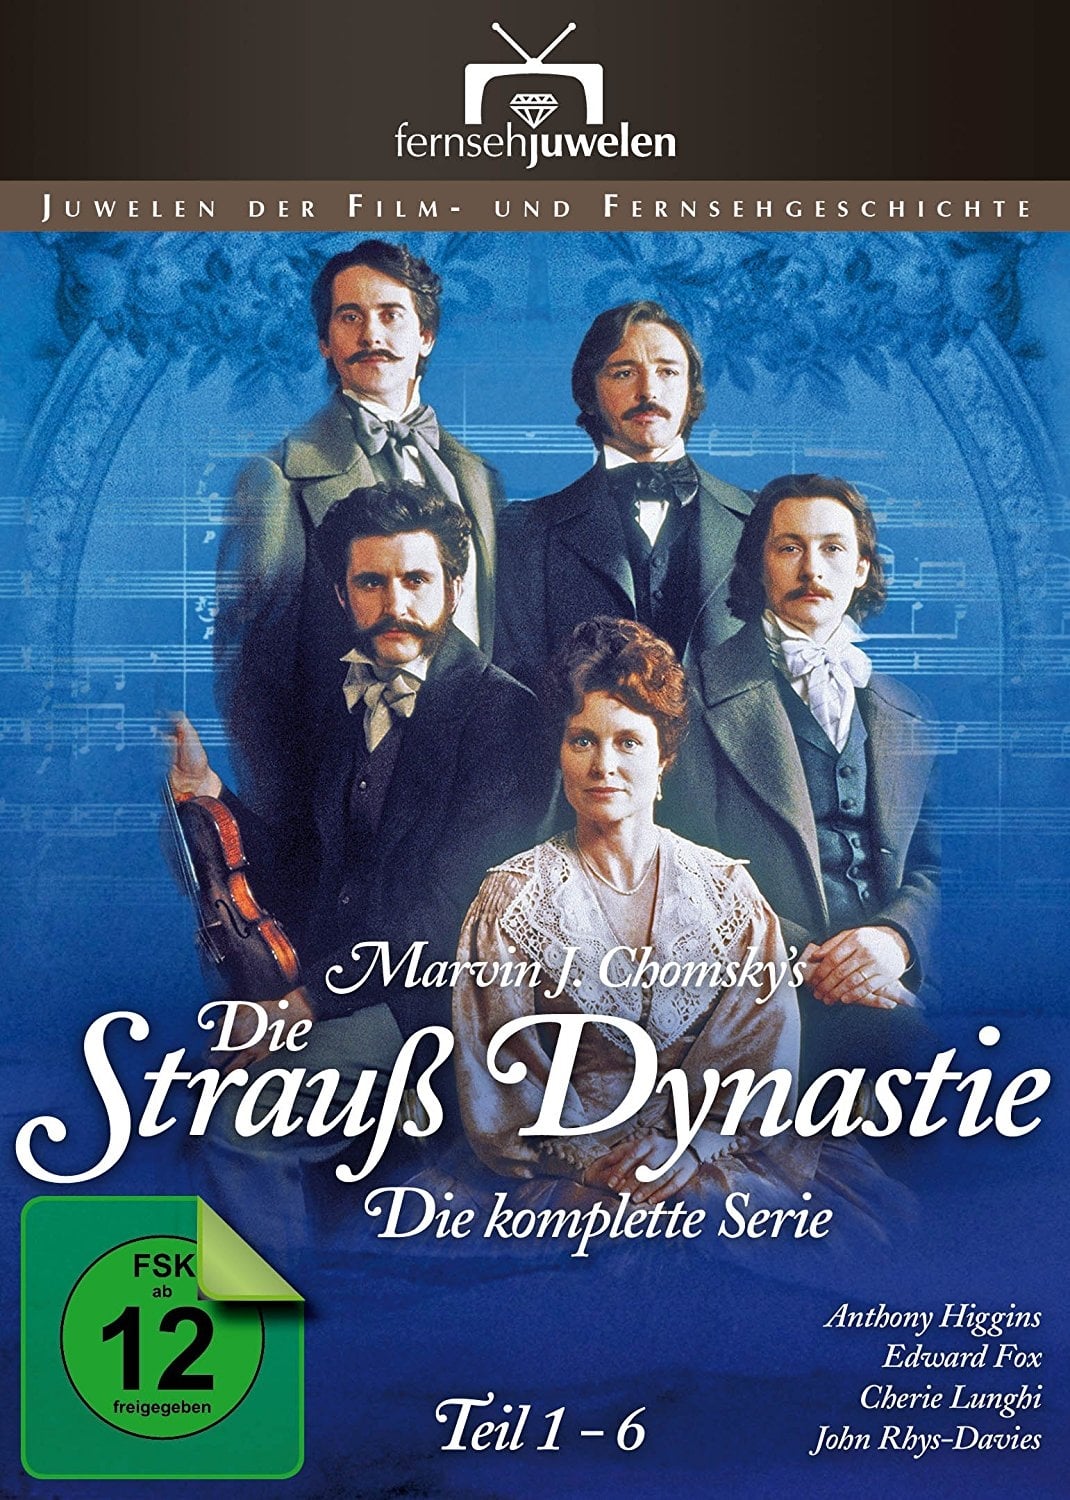 Strauss Dynasty